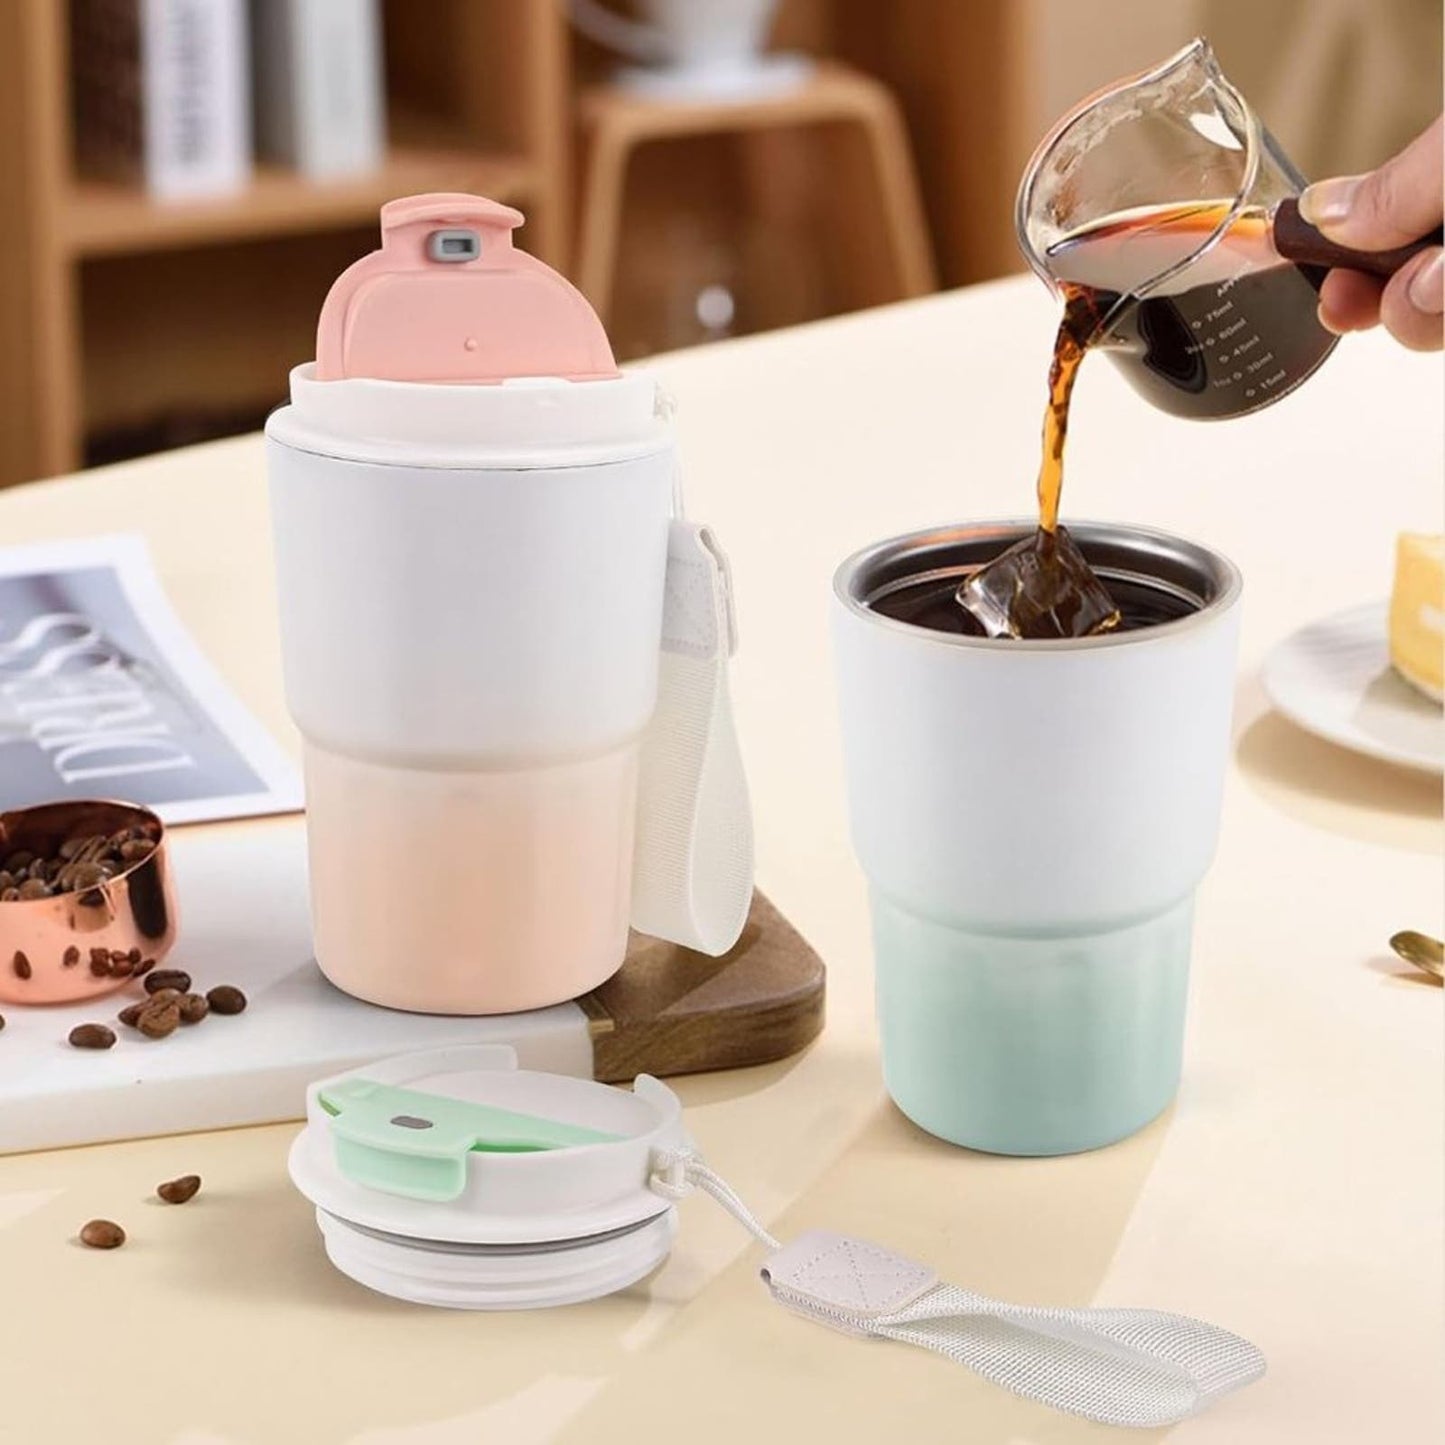 XIAPIA Travel Coffee Mug 12 oz, 2 Pack Coffee Cups with Lids, Leak Proof Reuse